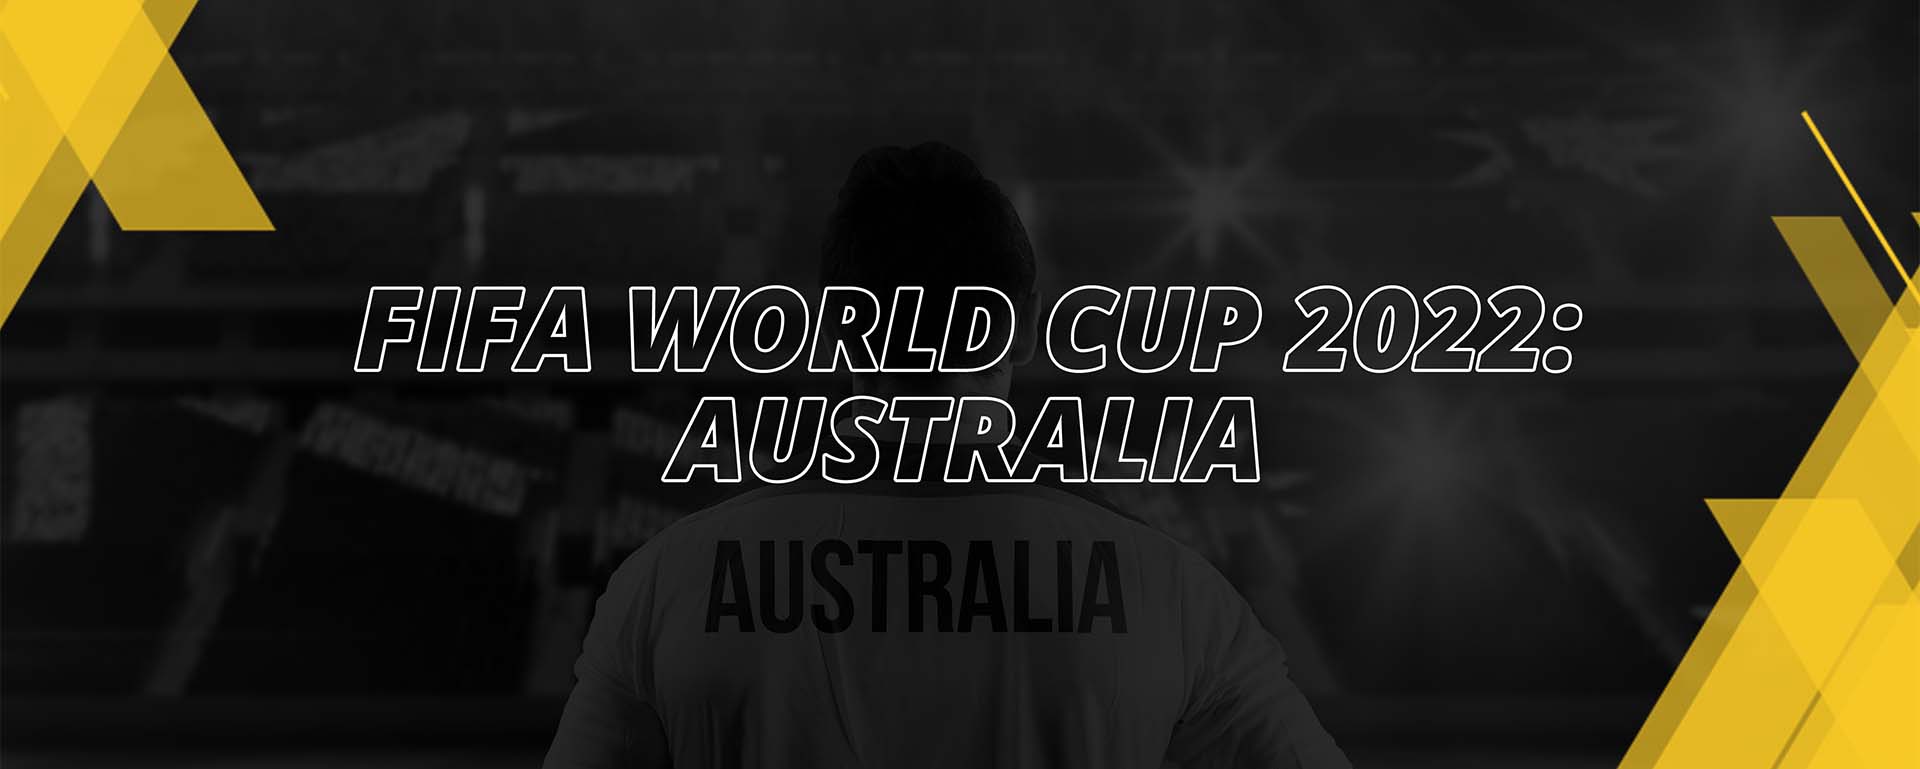 AUSTRALIA – FIFA WORLD CUP QATAR 2022 – FAN’S COMPENDIUM